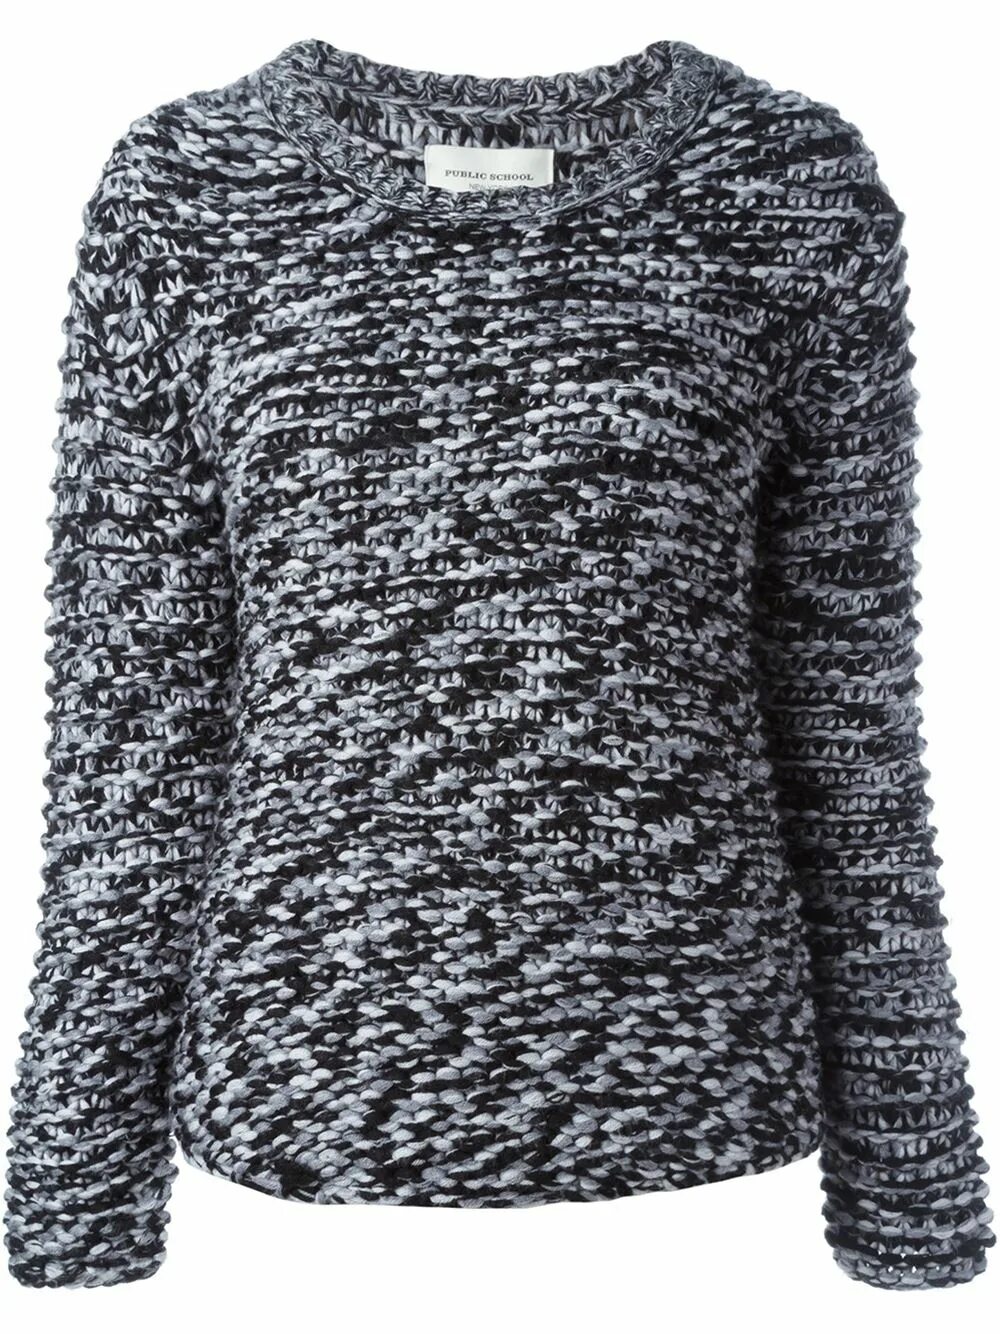 Меланжевый джемпер Zara Knit. Свитер женский. Меланжевый свитер. Меланжевый свитер женский.